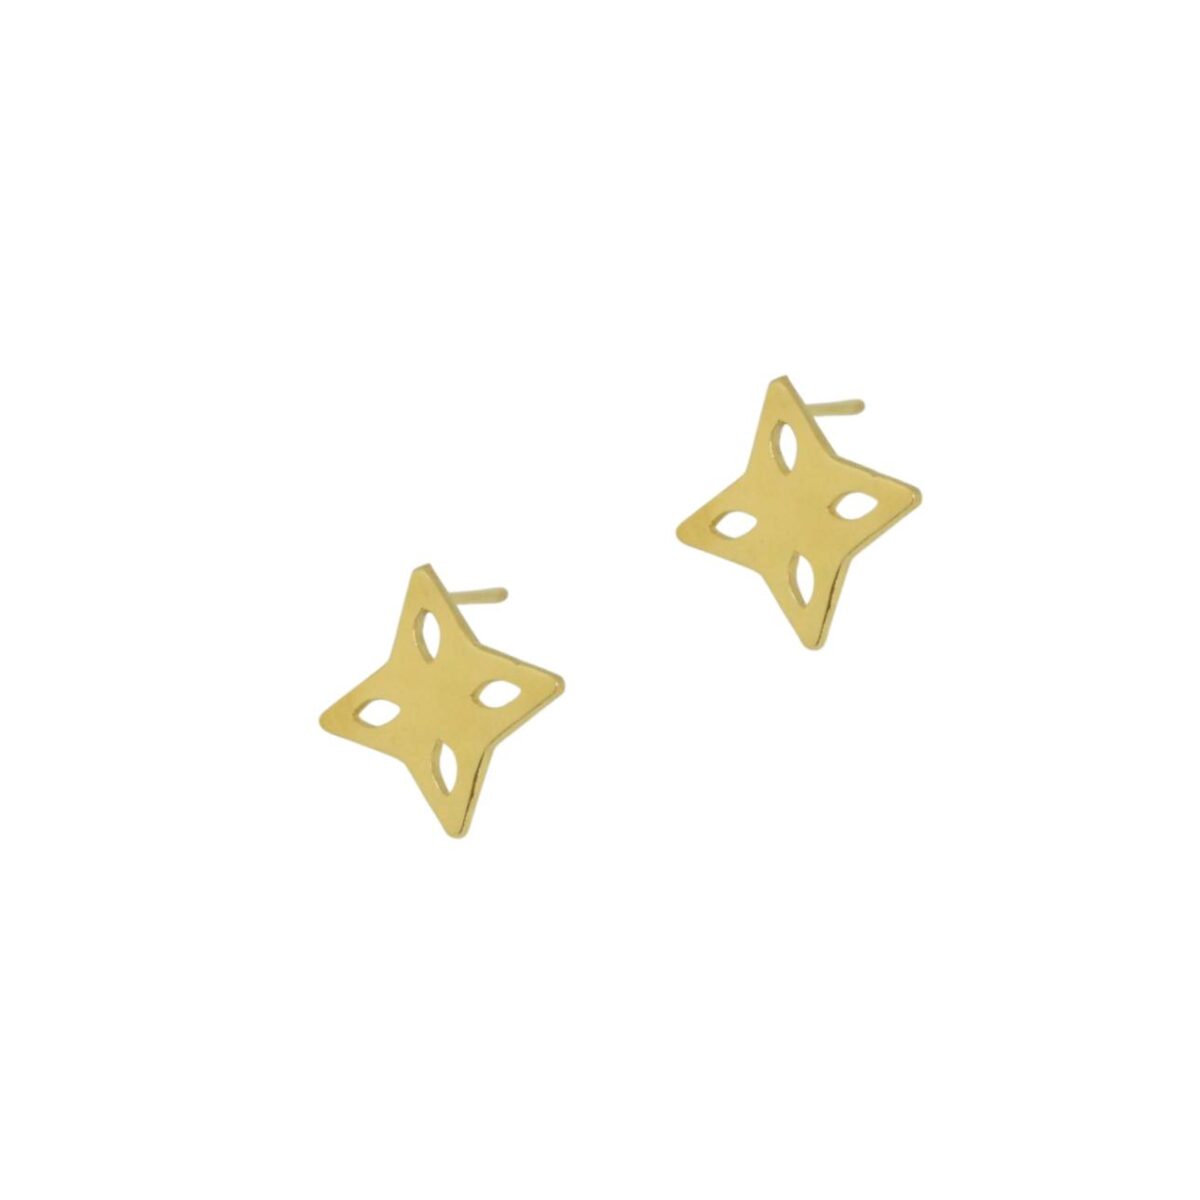 Rising star II gold plated earrings